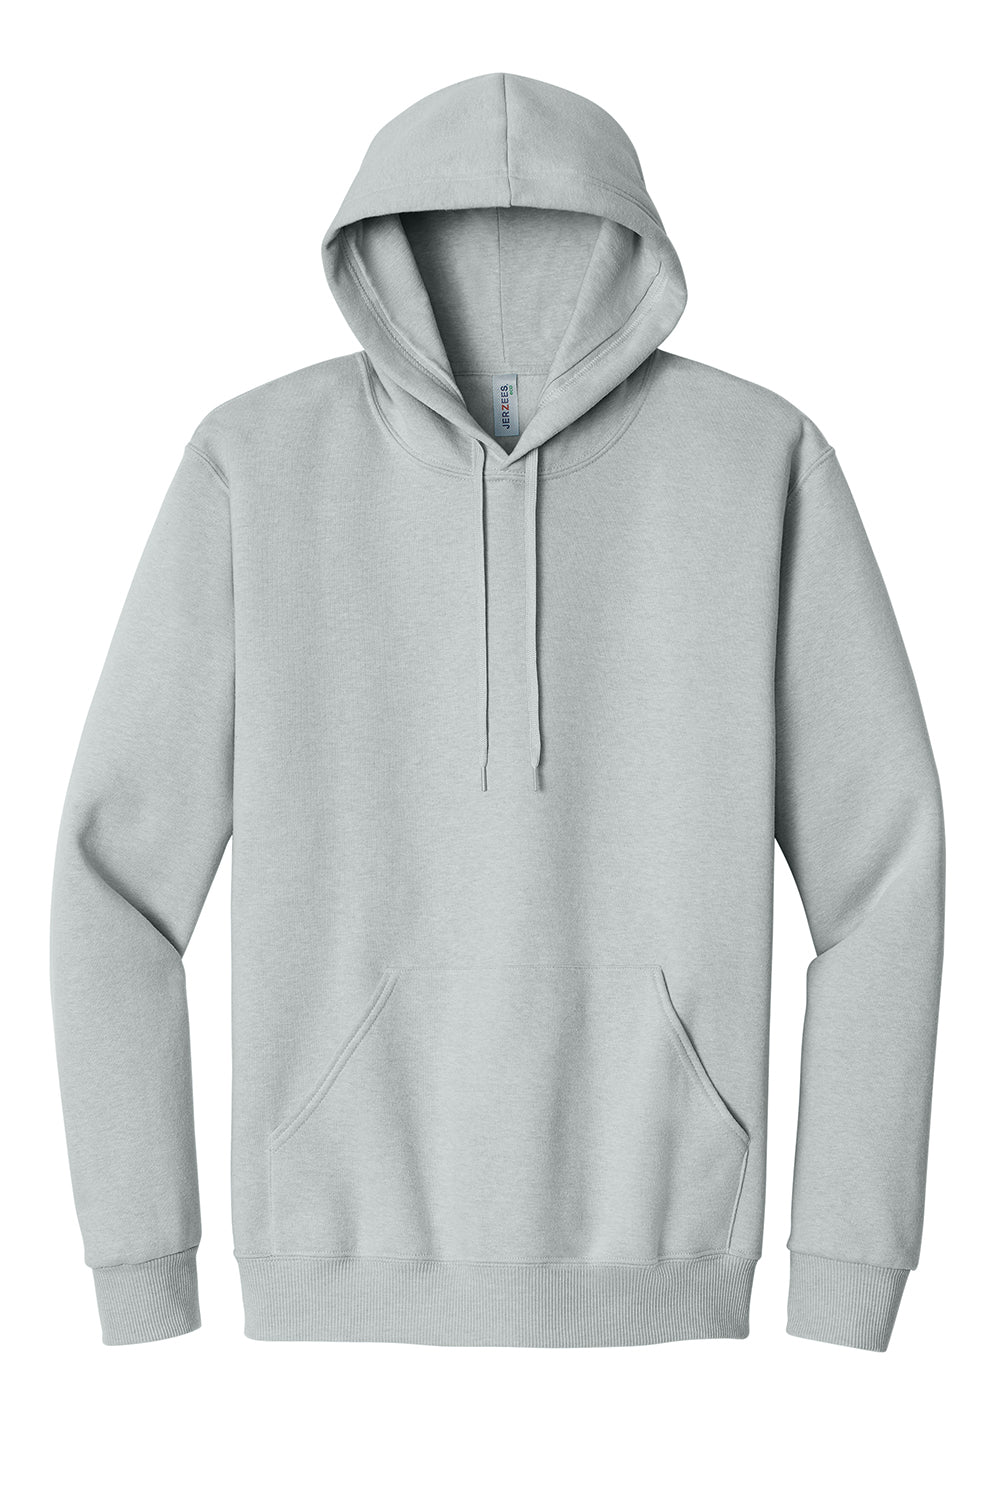 Jerzees 700M Mens Eco Premium Hooded Sweatshirt Hoodie Heather Frost Grey Flat Front